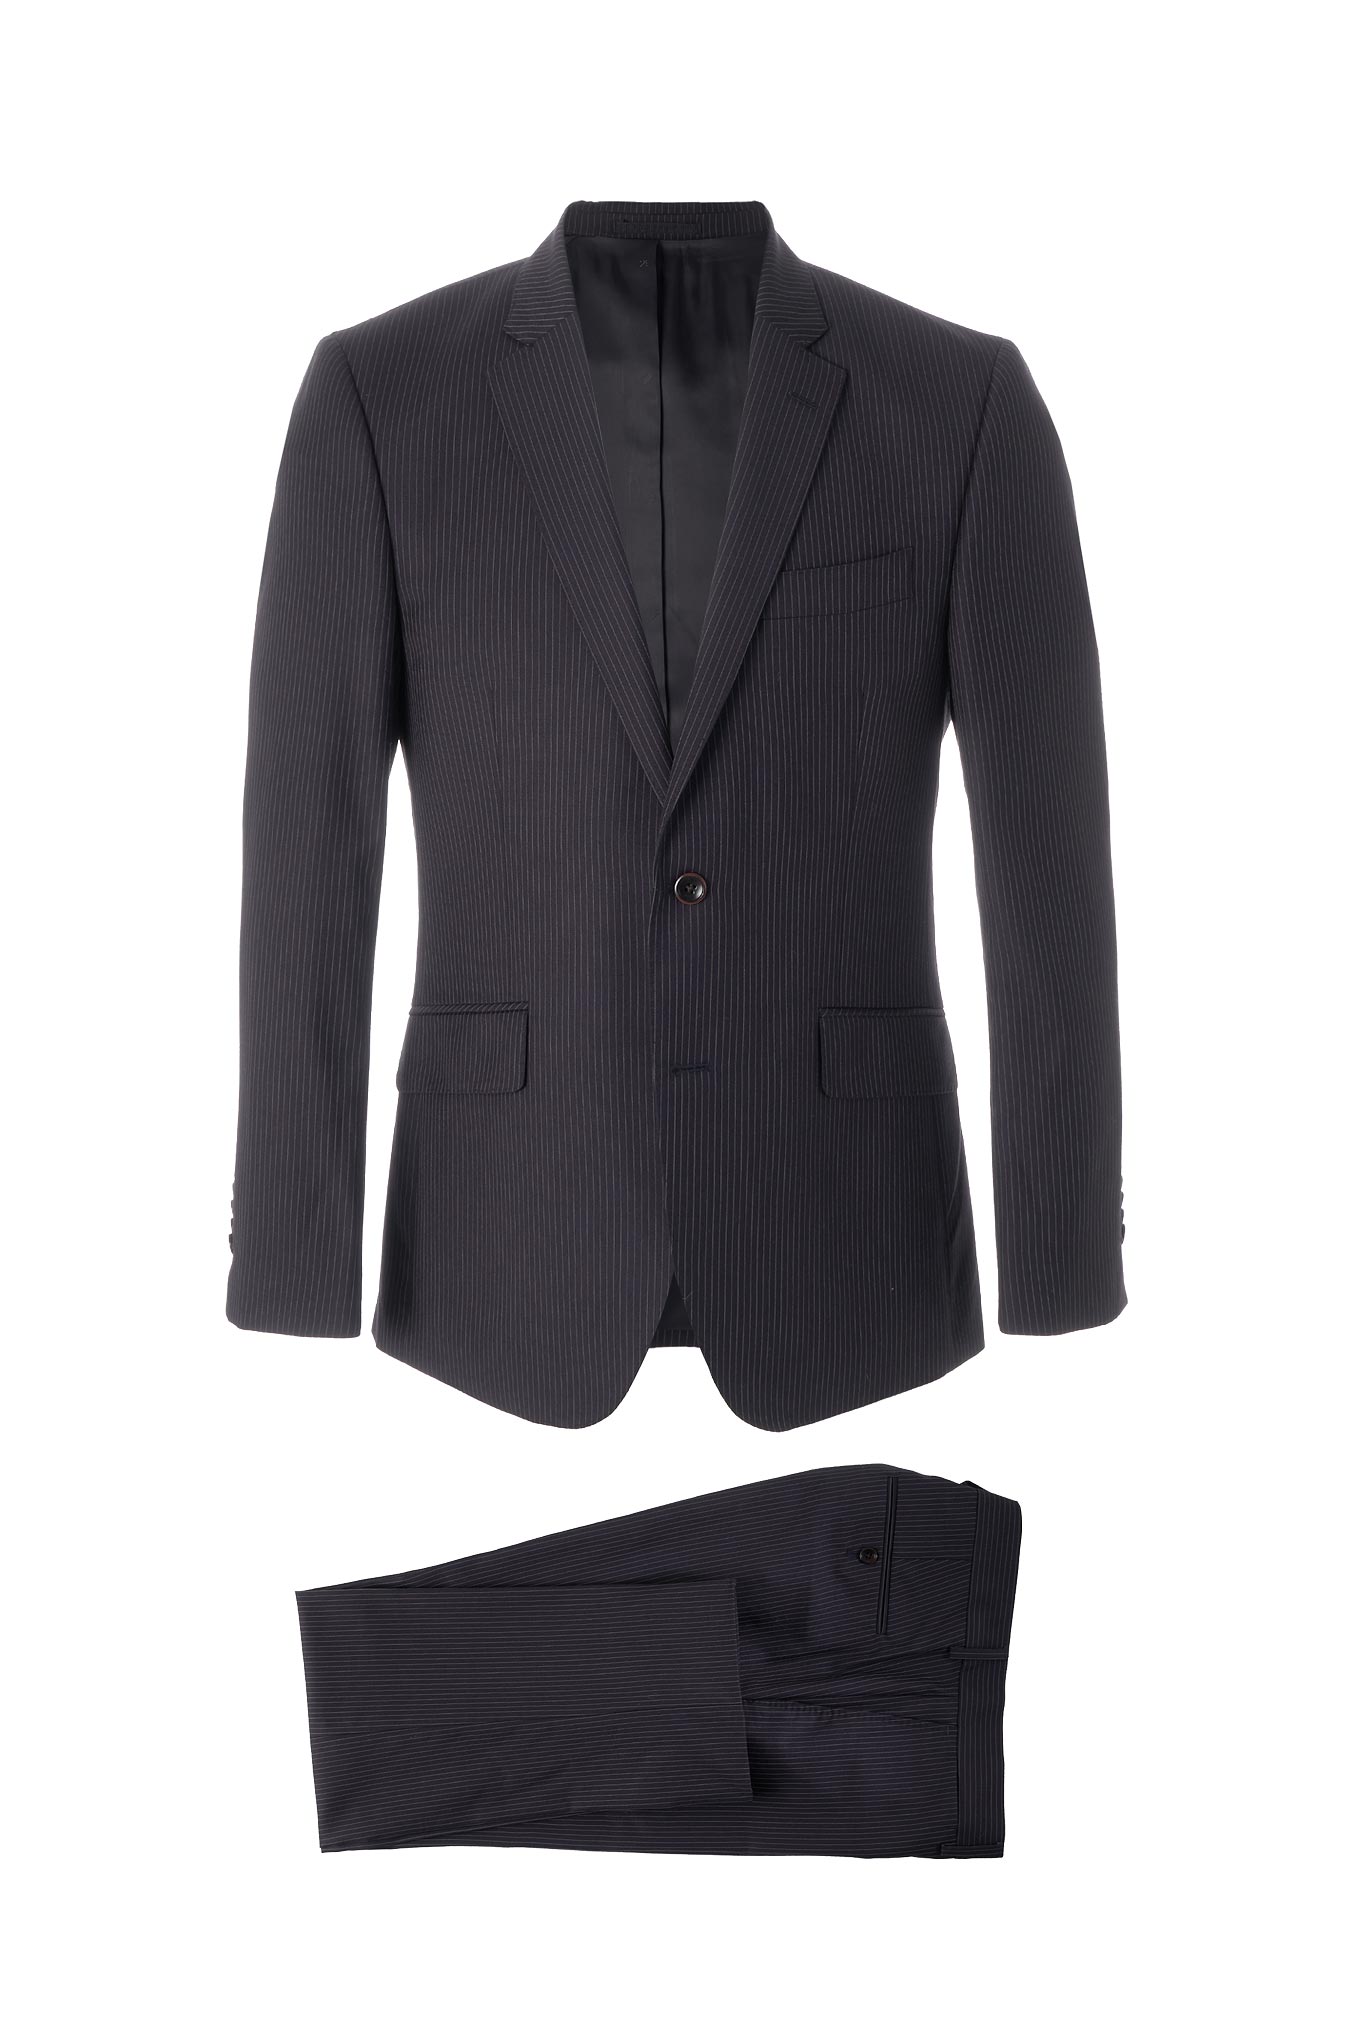 Suit Black Formal Man